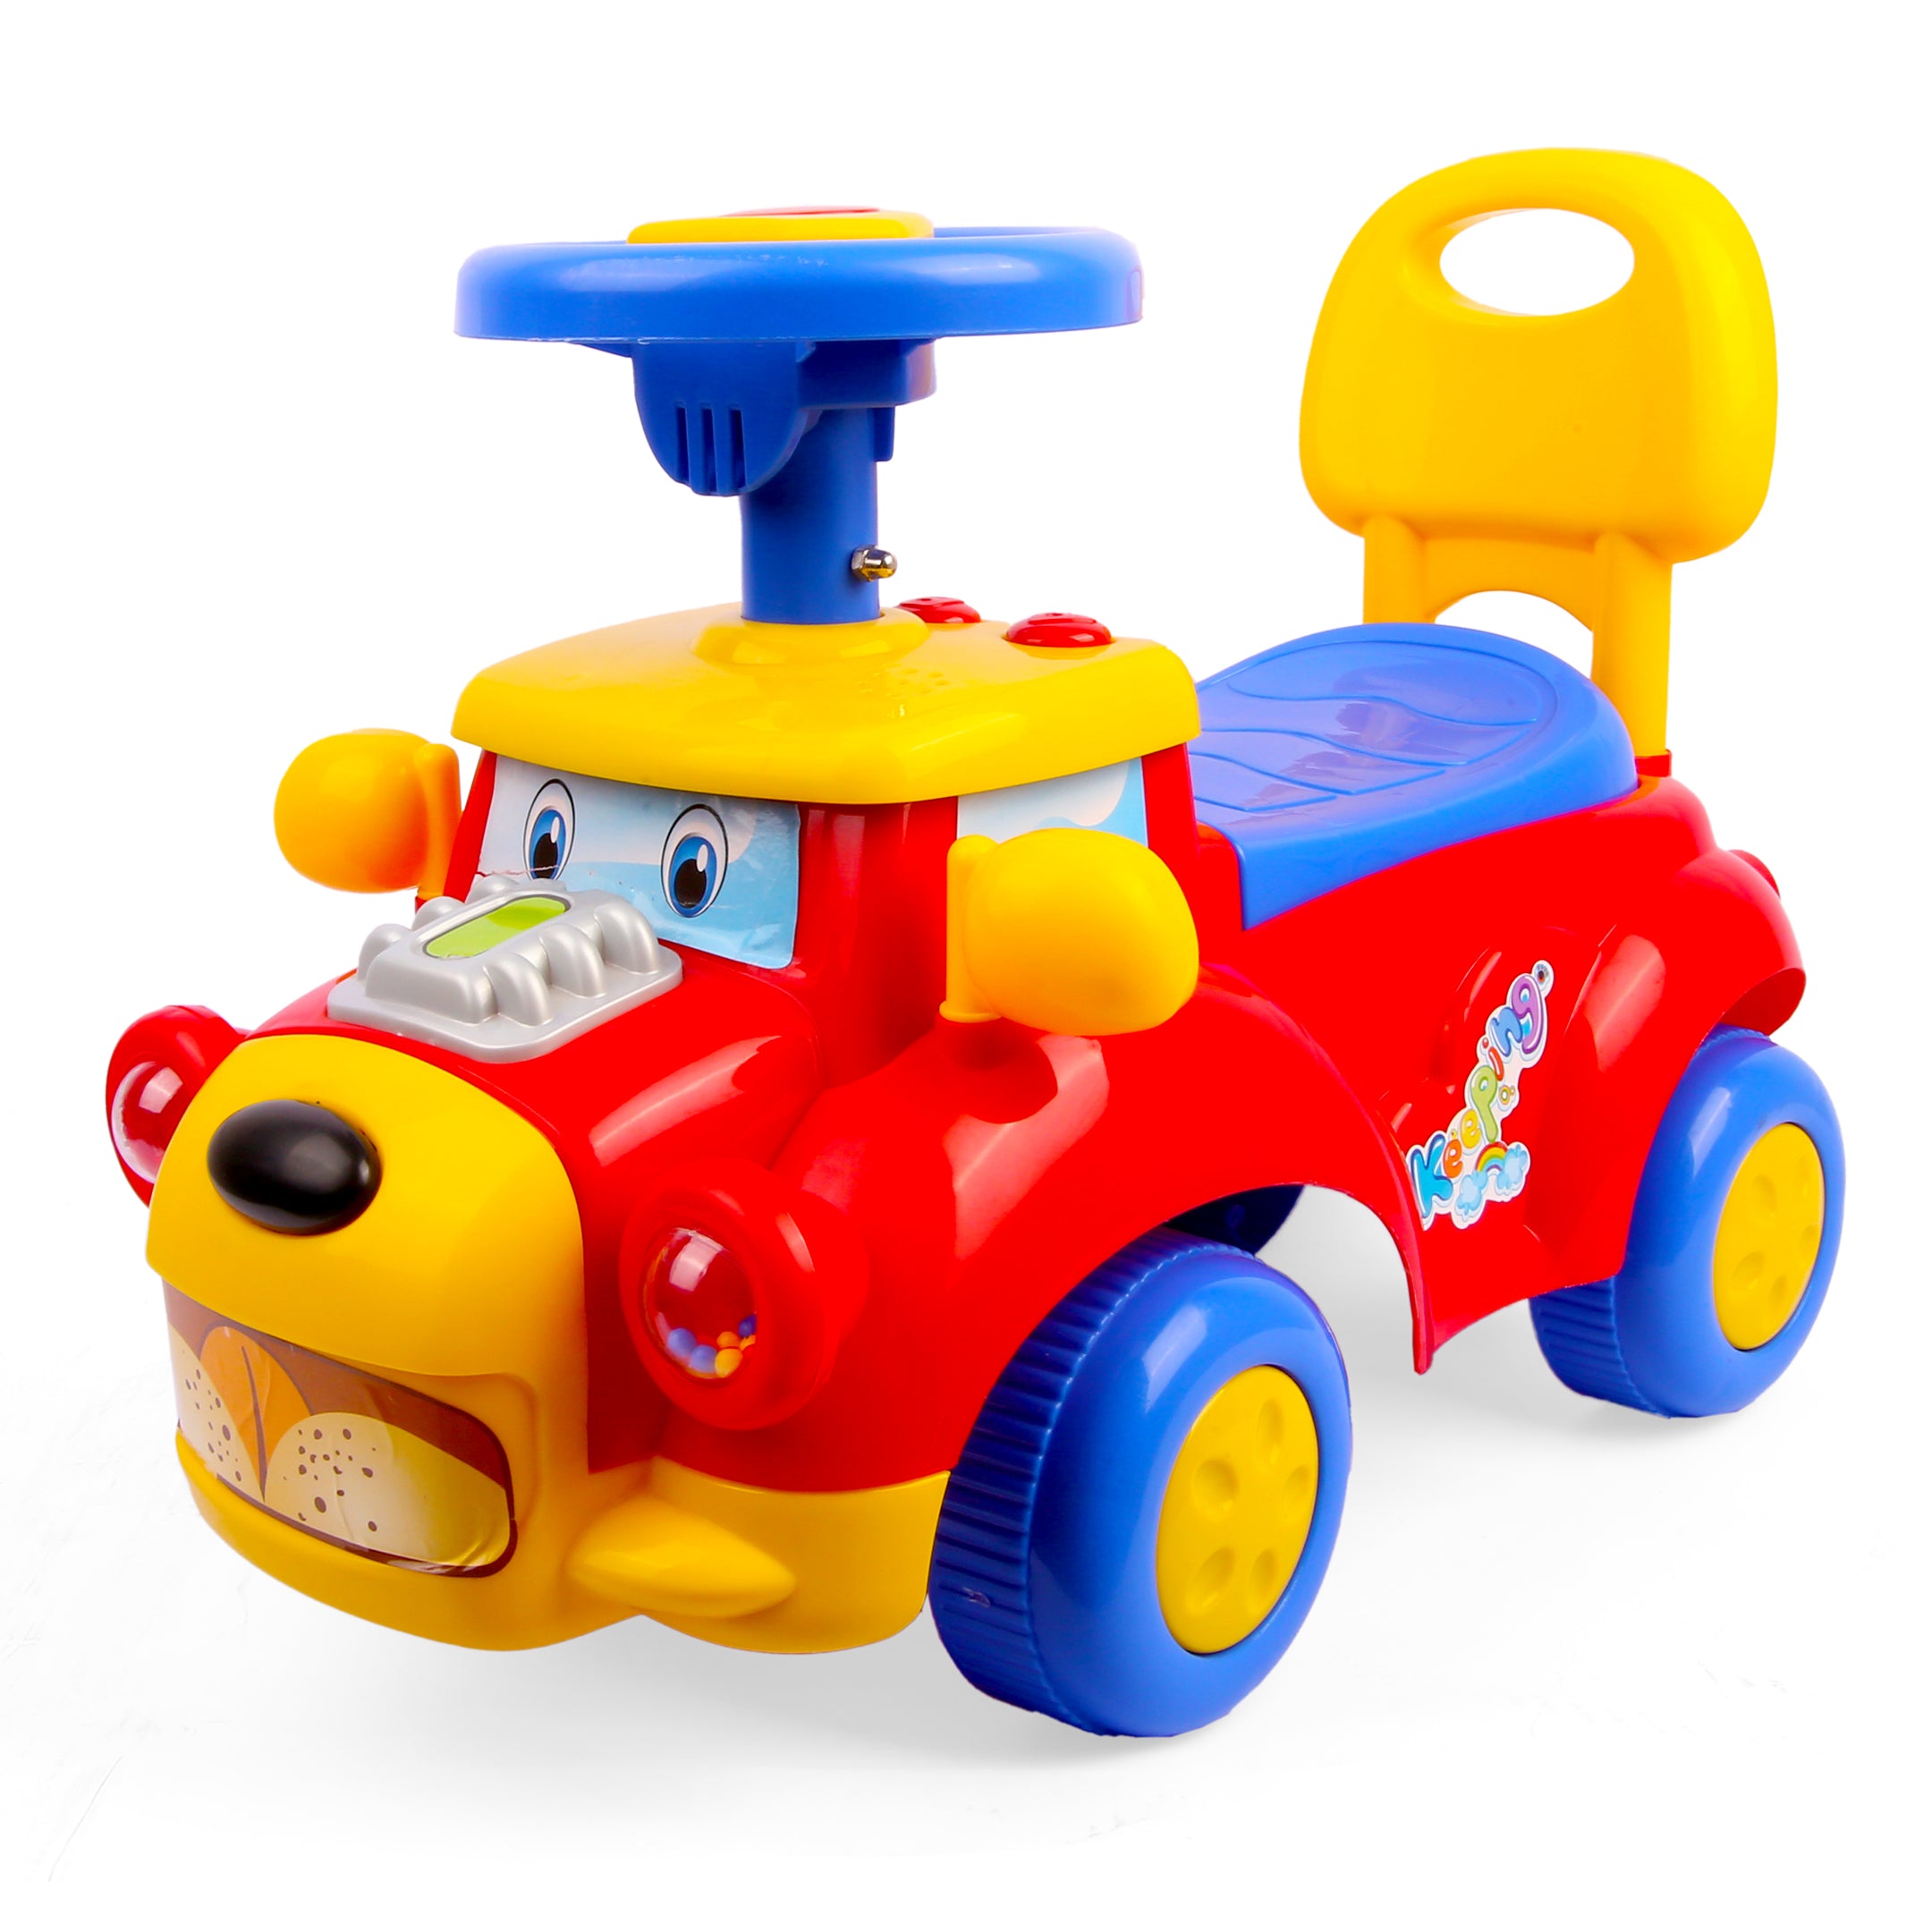 Cute Colorful Ride On Manual Push Car